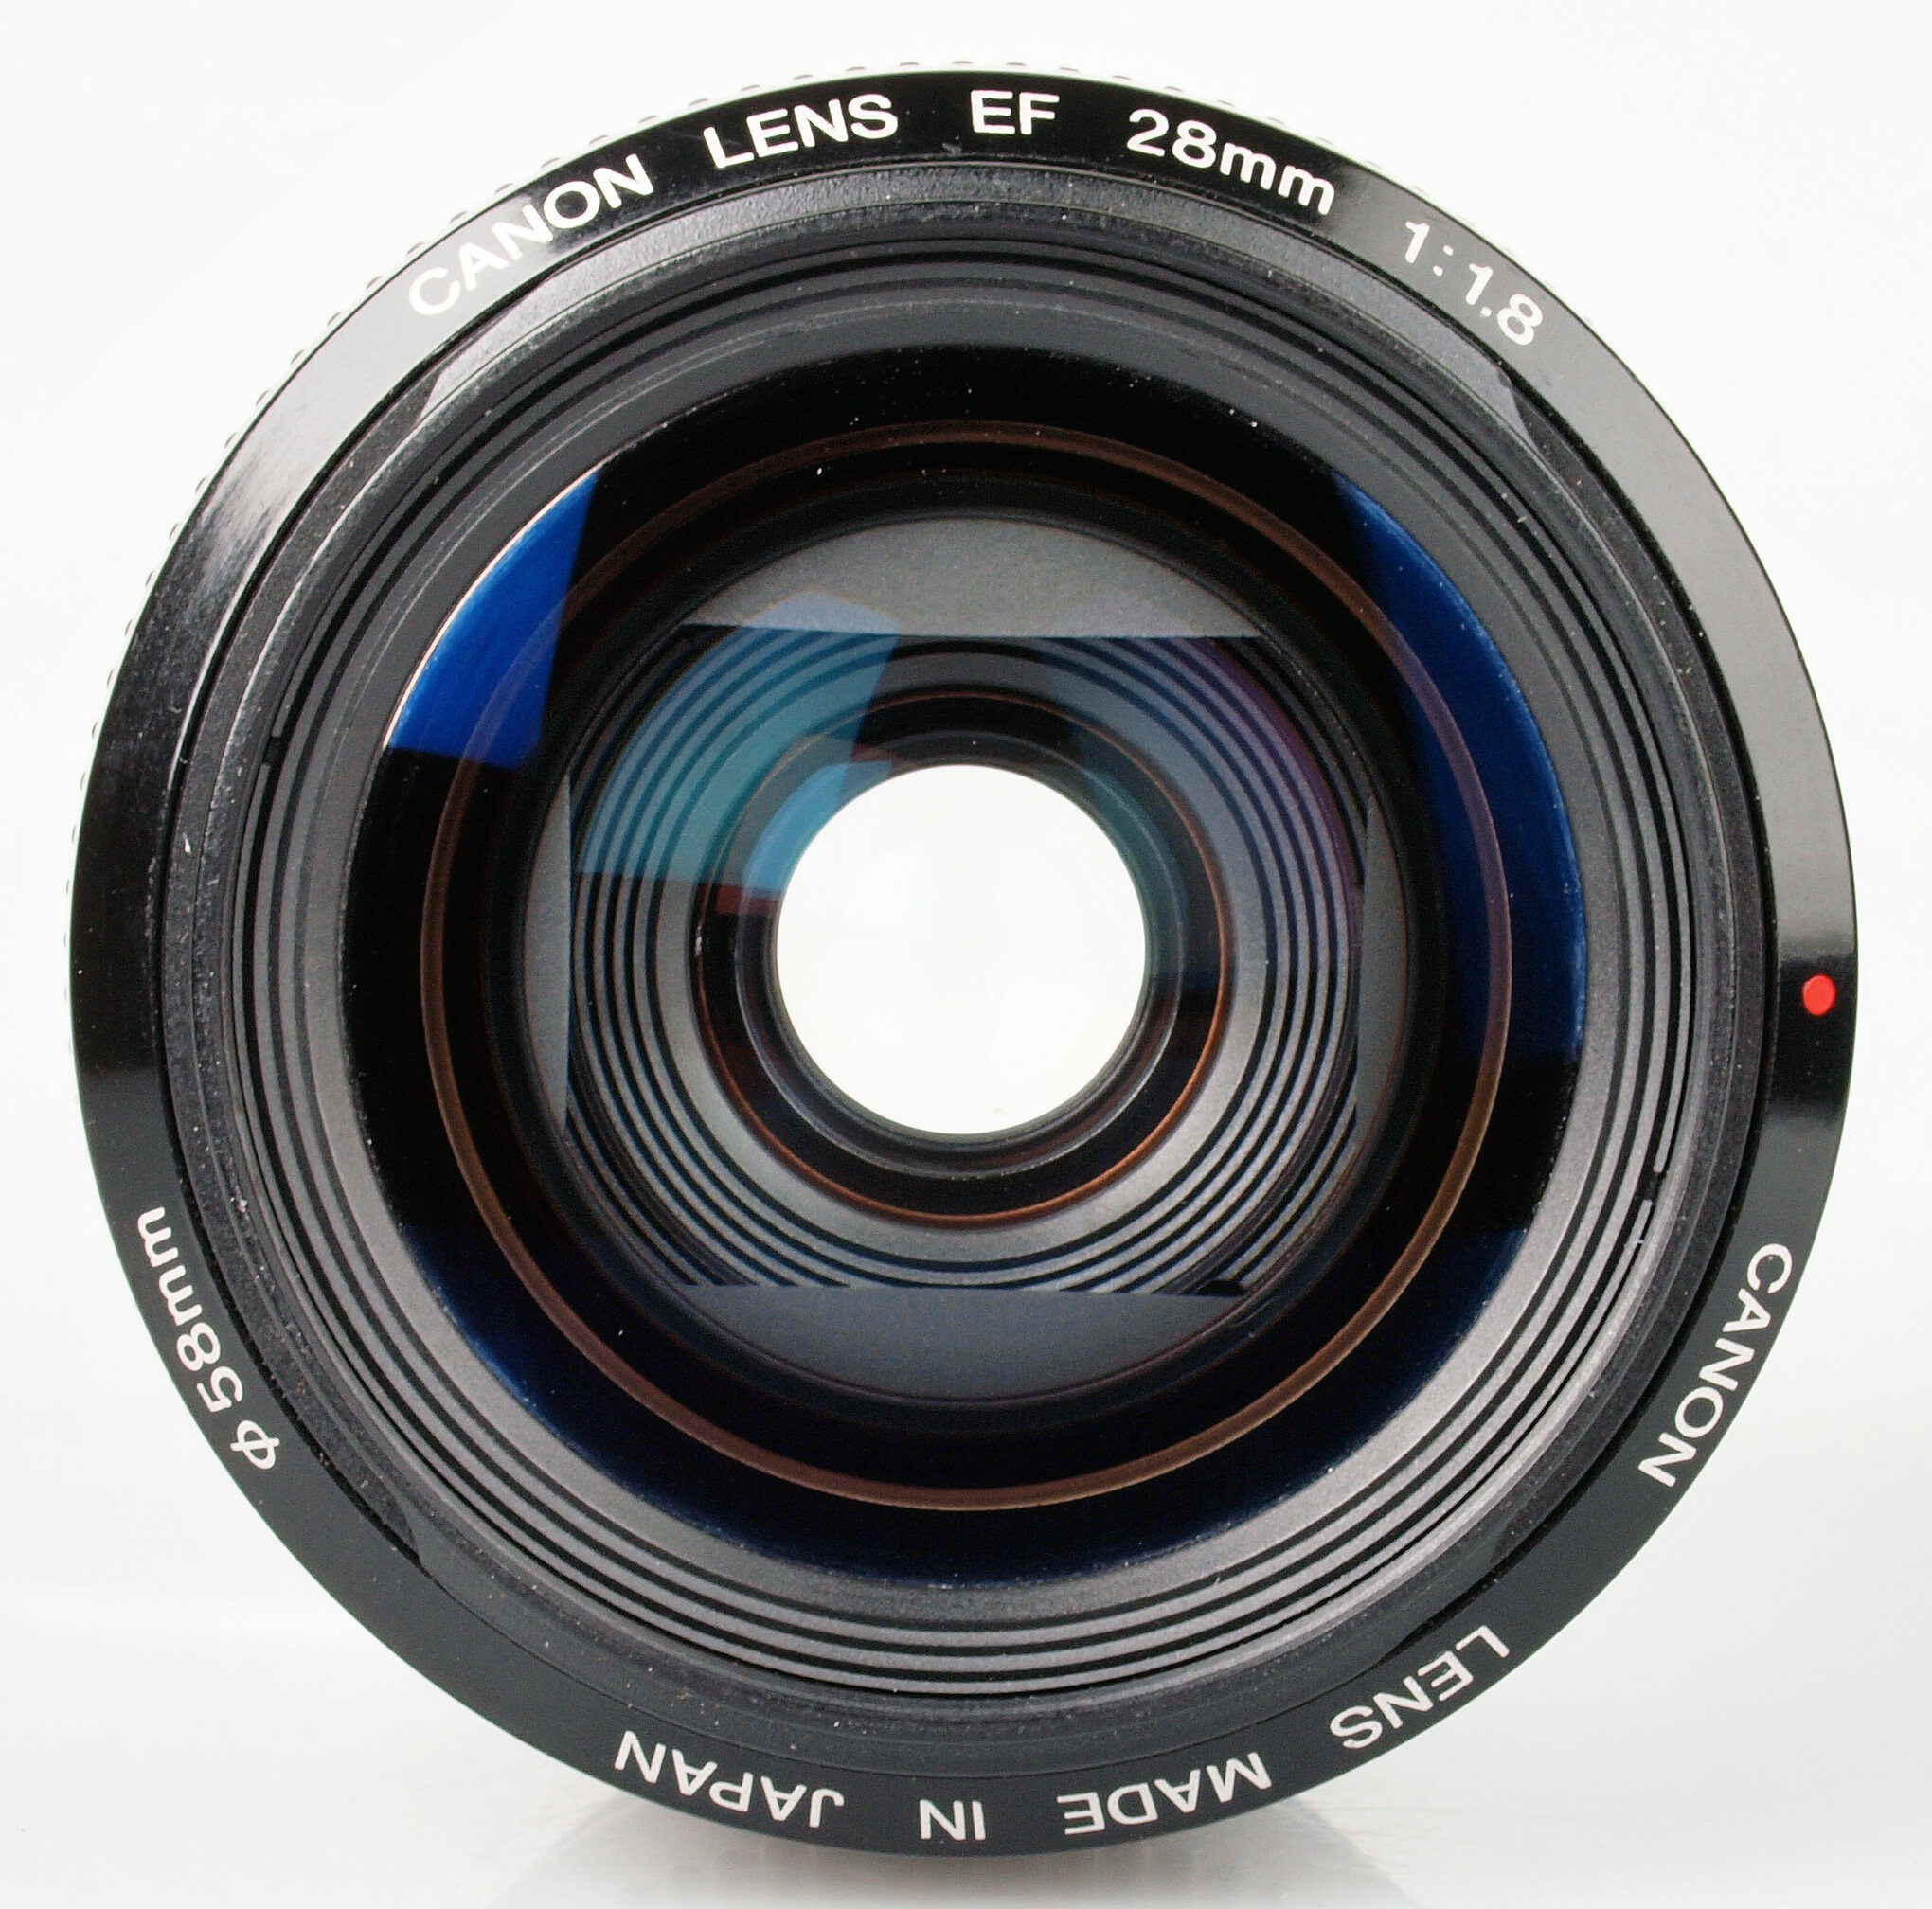 Canon EF 28mm f/1.8 USM Lens Review